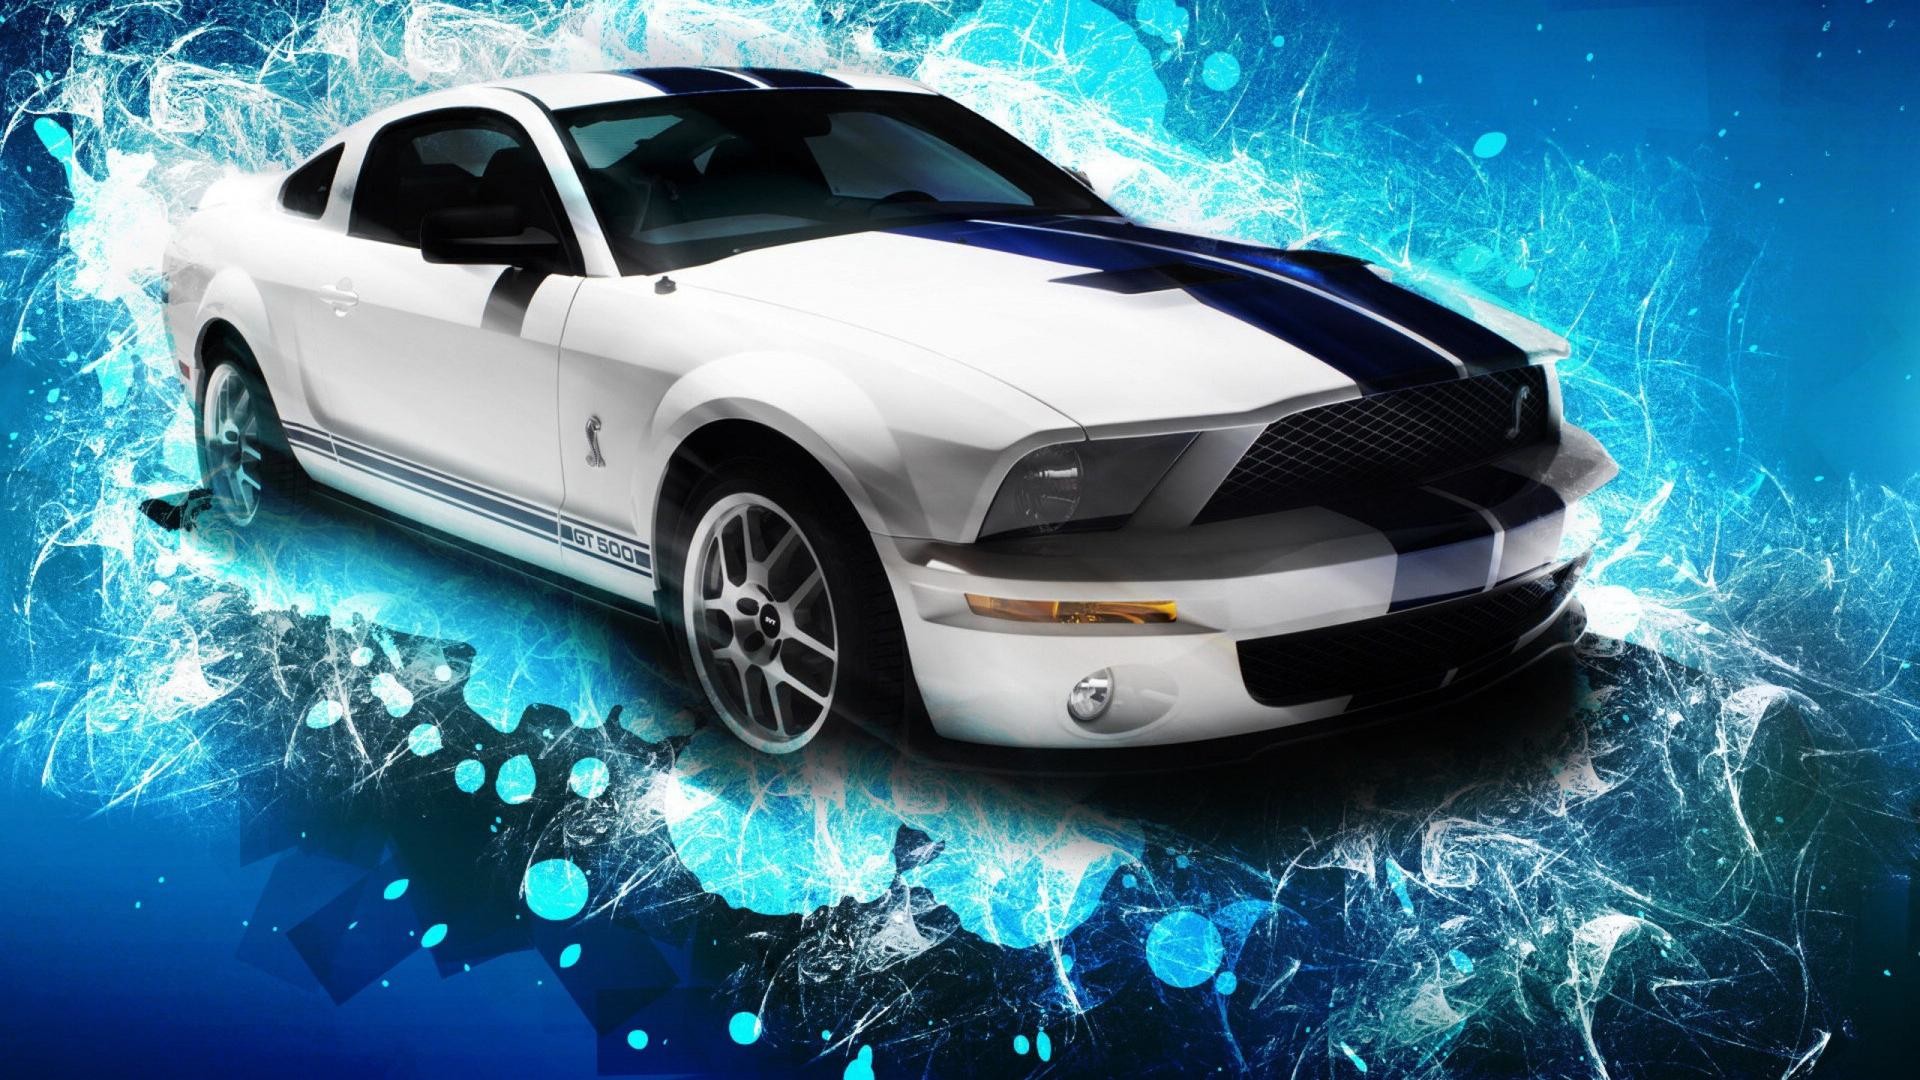 1920x1080  Cool Mustang cobra car desktop backgrounds wide wallpapers:1280x800,1440x900,1680x1050  -